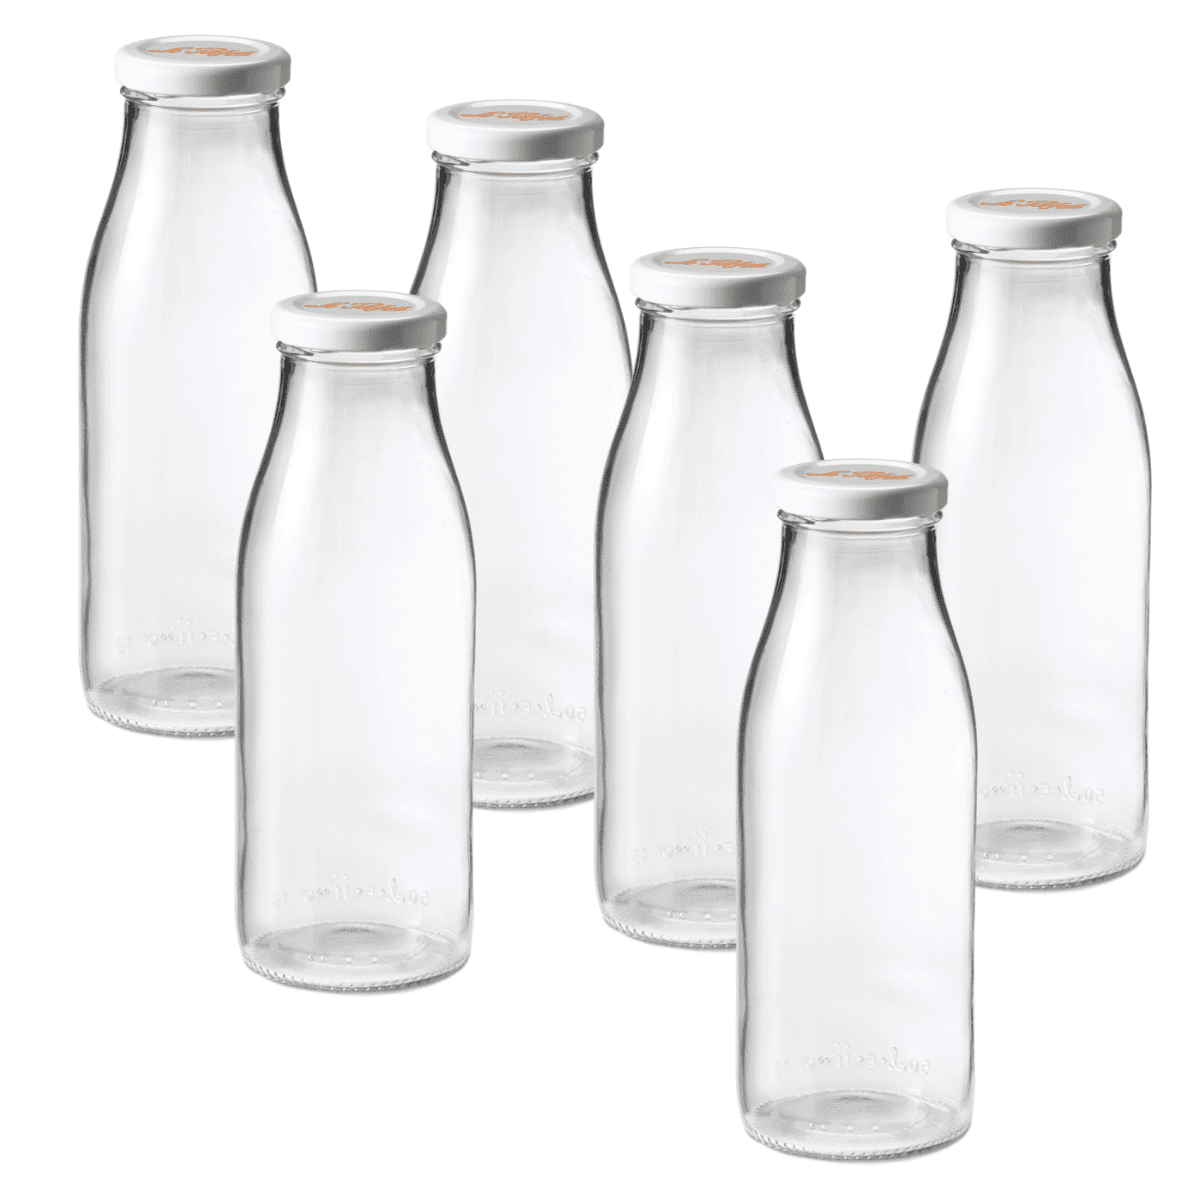 Paksh Novelty Travel Glass Drinking Bottle Mason Jar 16 Ounce [6